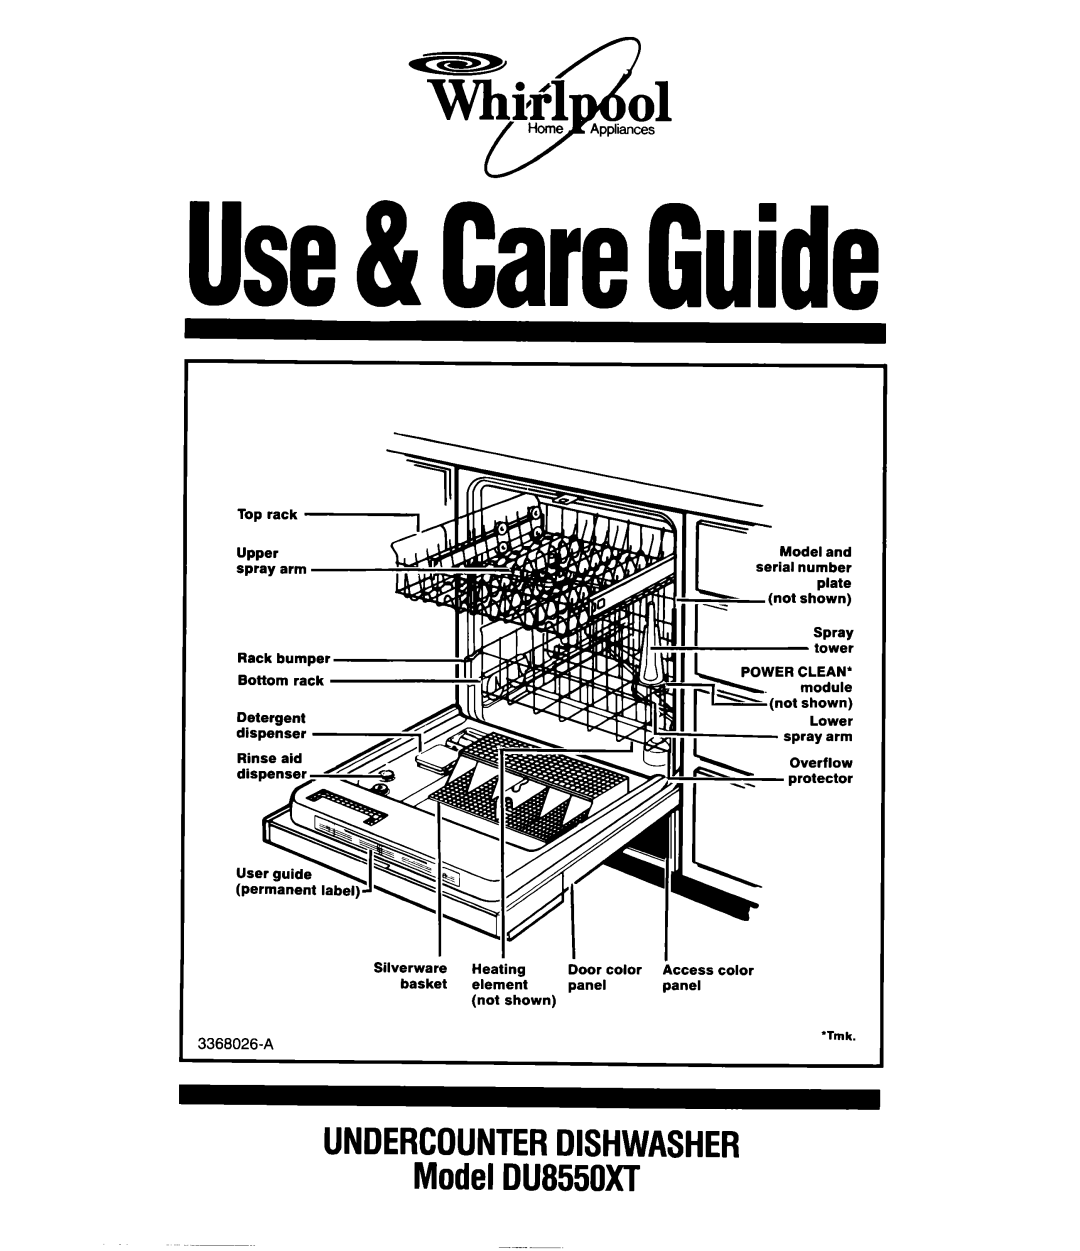 Whirlpool manual Use&CareGuide, UNDERCOUNTERDISHWASHER ModelDU8550XT 